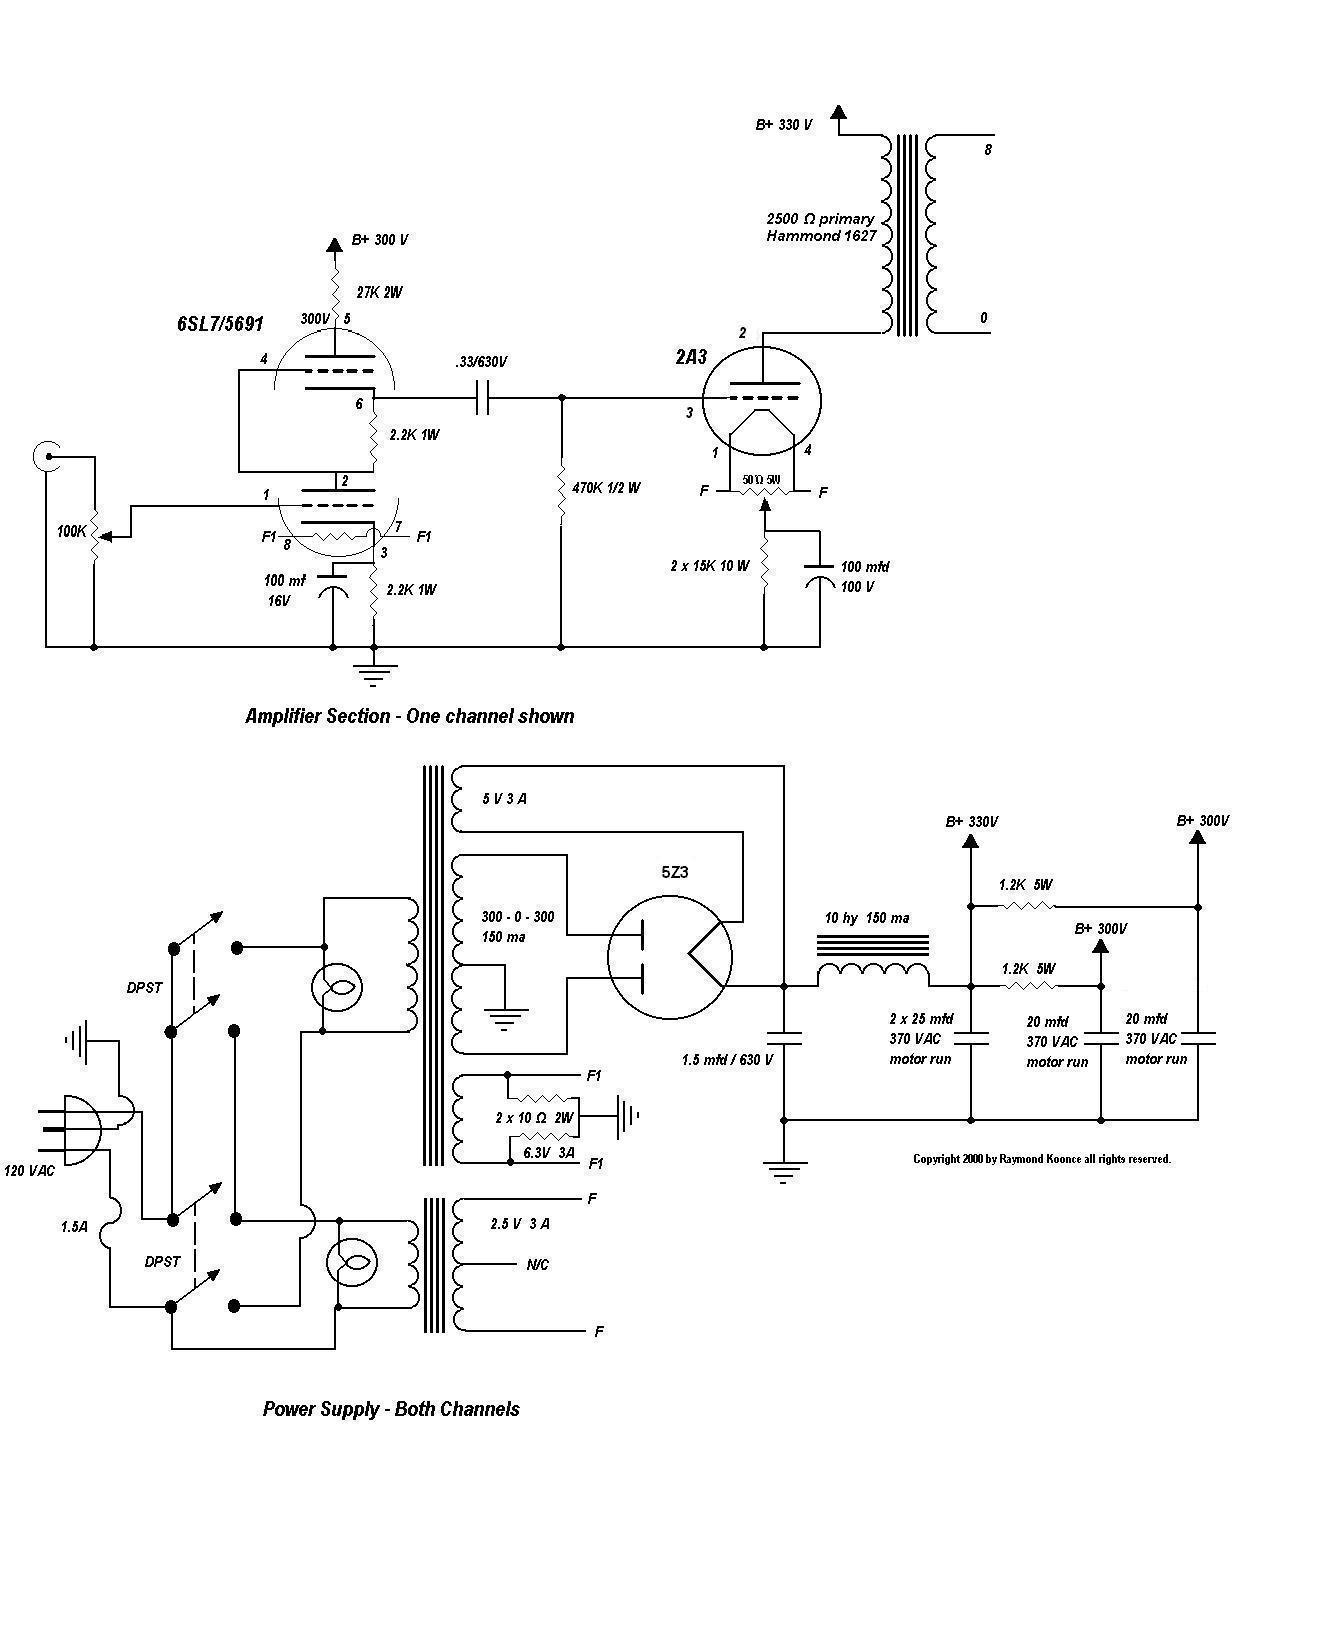 6SL7 CPSR / 2A3 Loftin-White tubo amplificador Schematic | Projetos ...